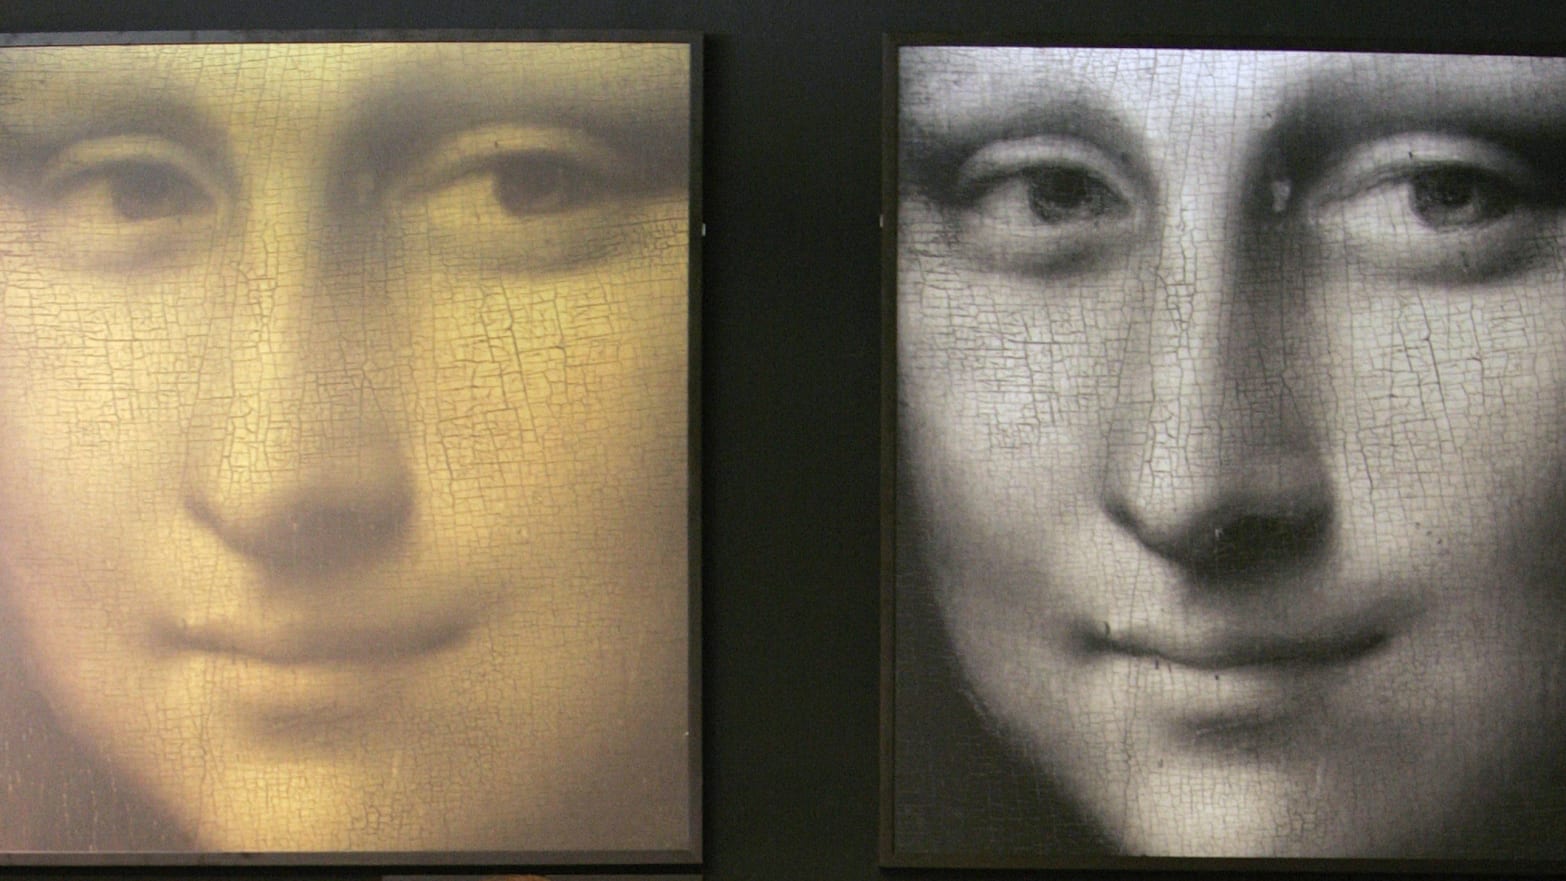 Leonardo da Vinci’s “Mona Lisa” is shown on screens.